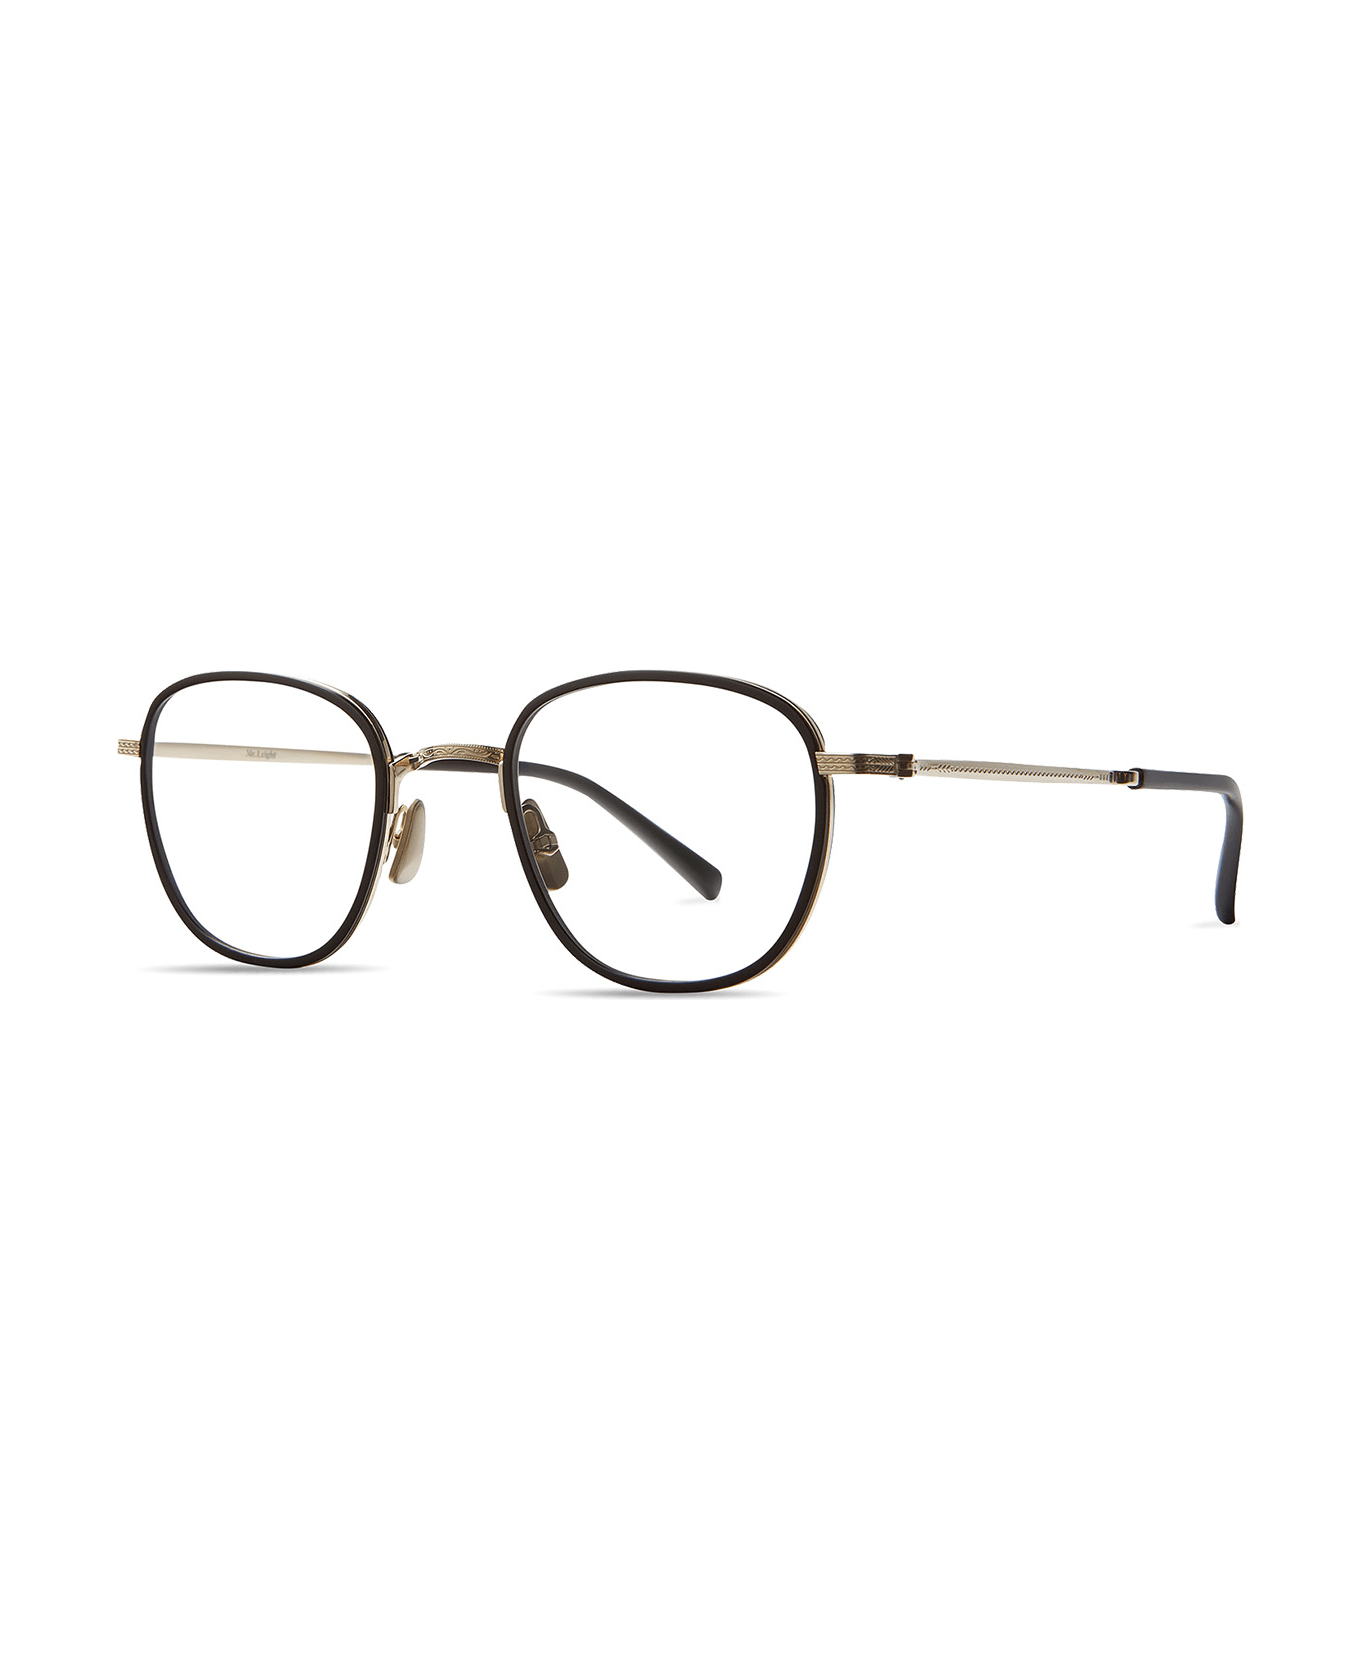 Mr. Leight Griffith Ii C Black-white Gold Glasses - Black-White Gold